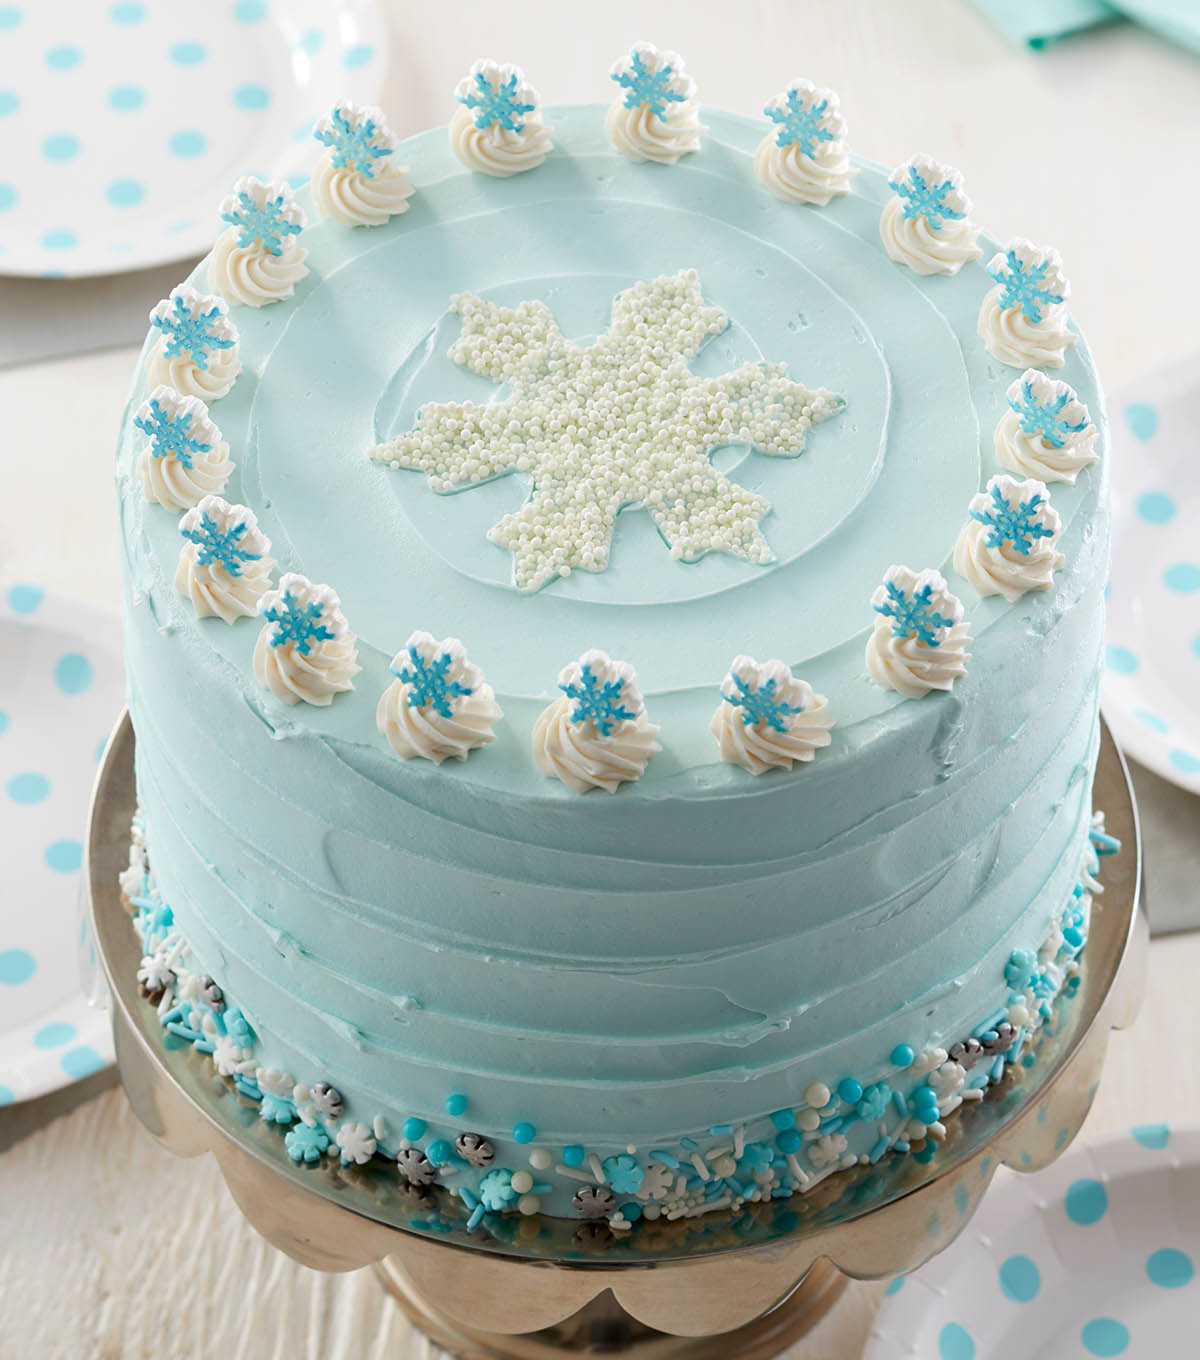 Winter Wonderland Birthday Cake
 How To Make A Winter Wonderland Snowflake Cake